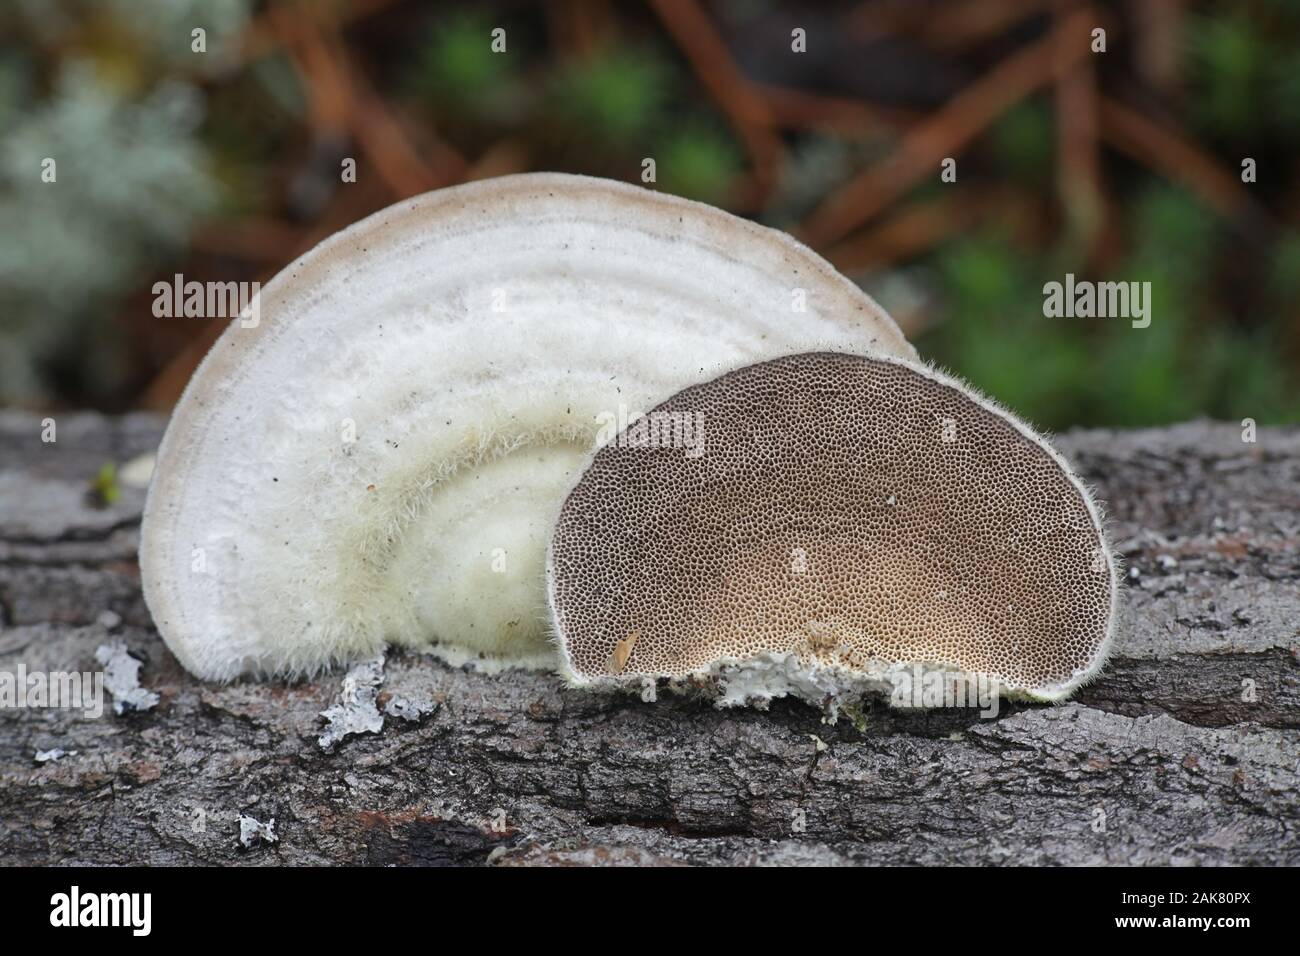 Trametes hirsuta, known as hairy bracket fungus, mushrooms from Finland Stock Photo